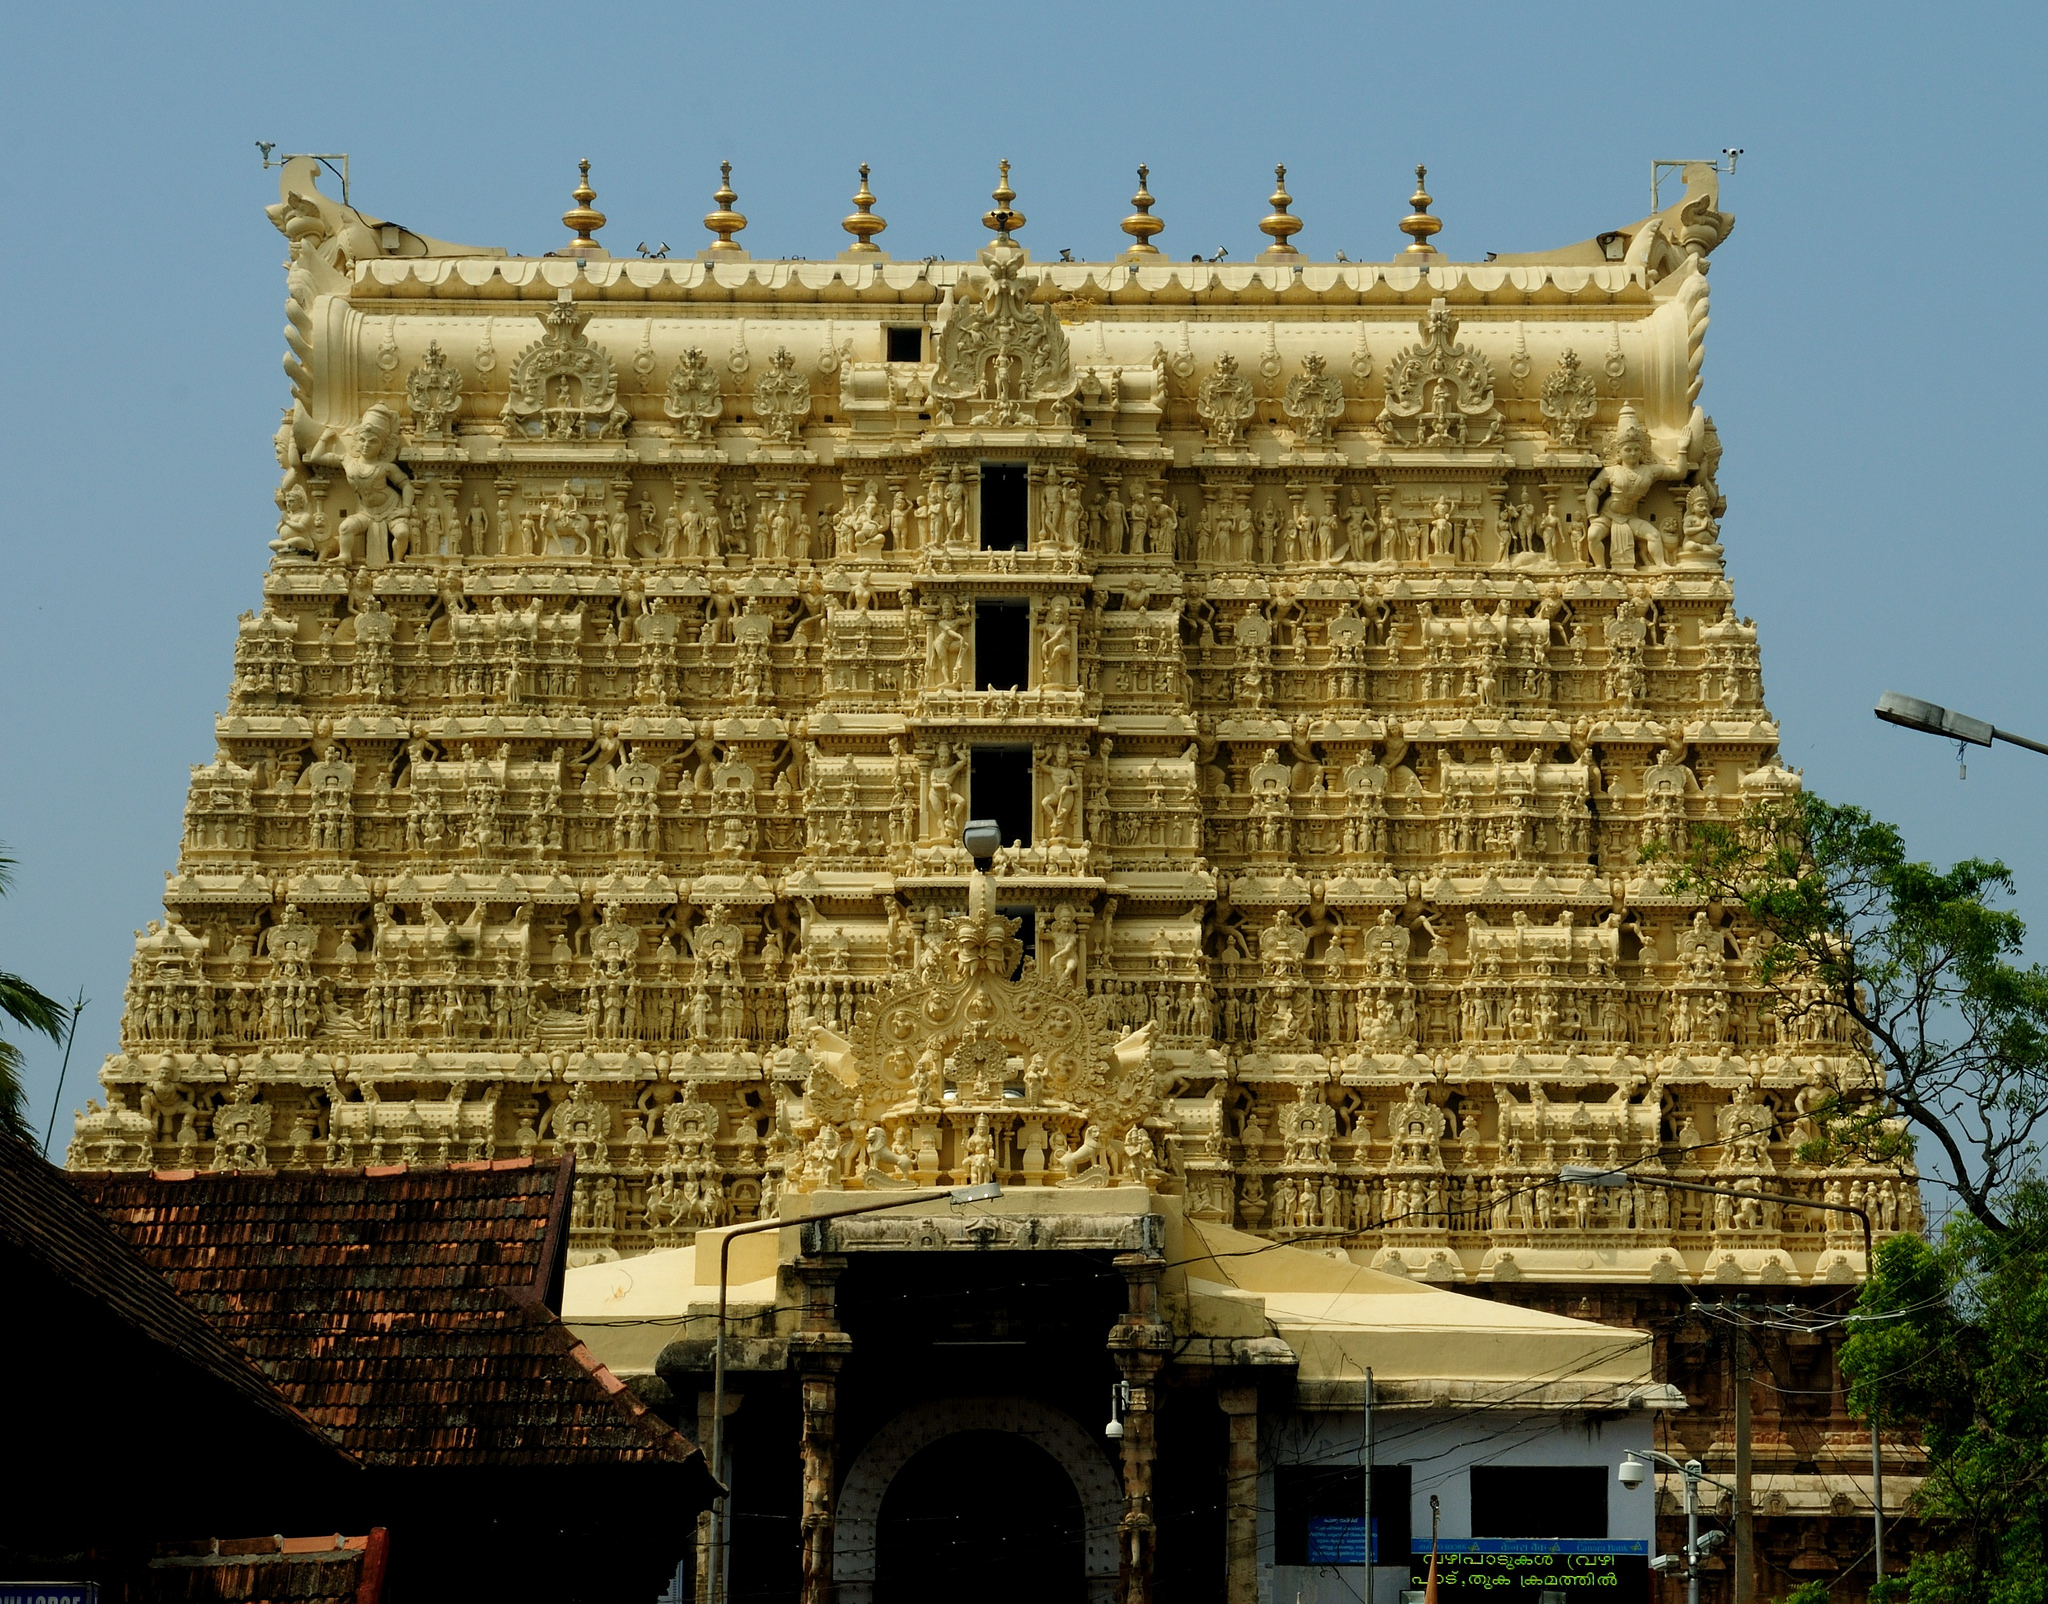 The Gopuram (Tower) of a historic Hindu Temple, Trivandrum, Kerala